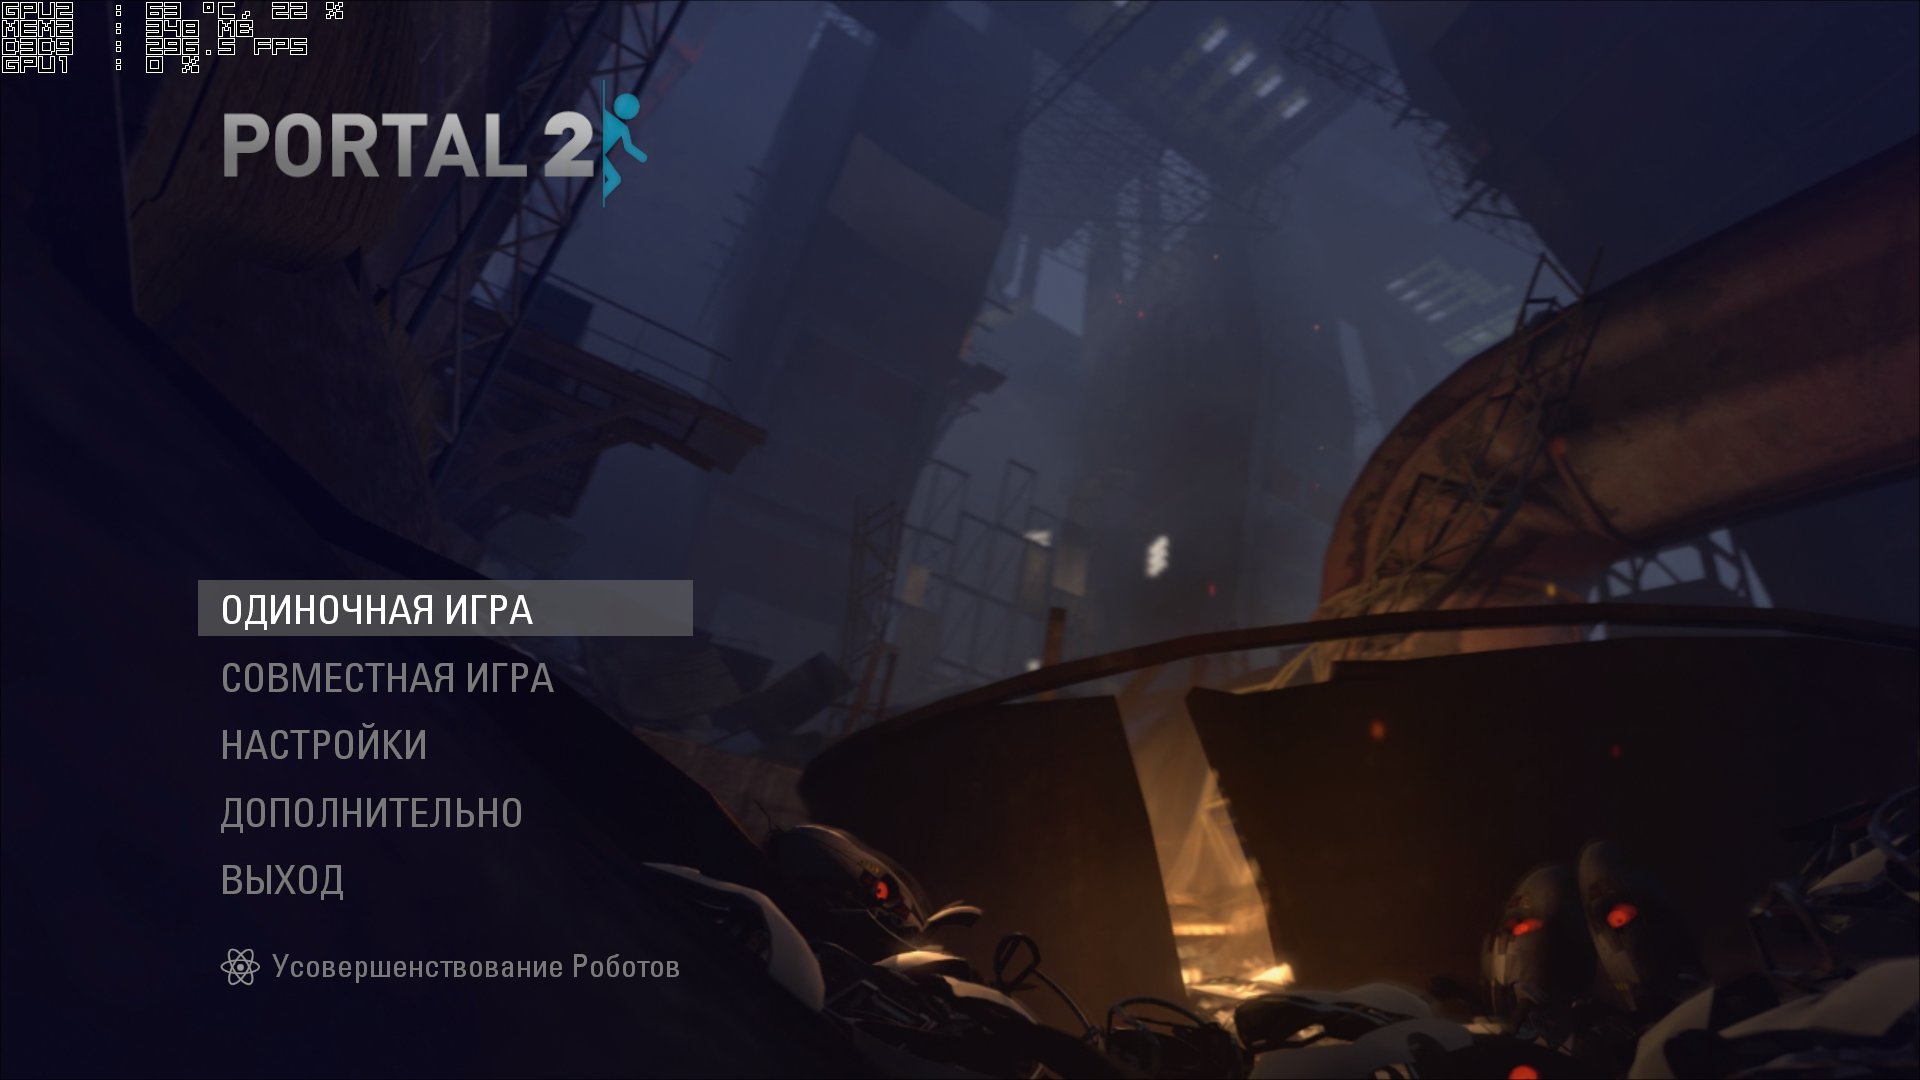 Portal 2 can play фото 32